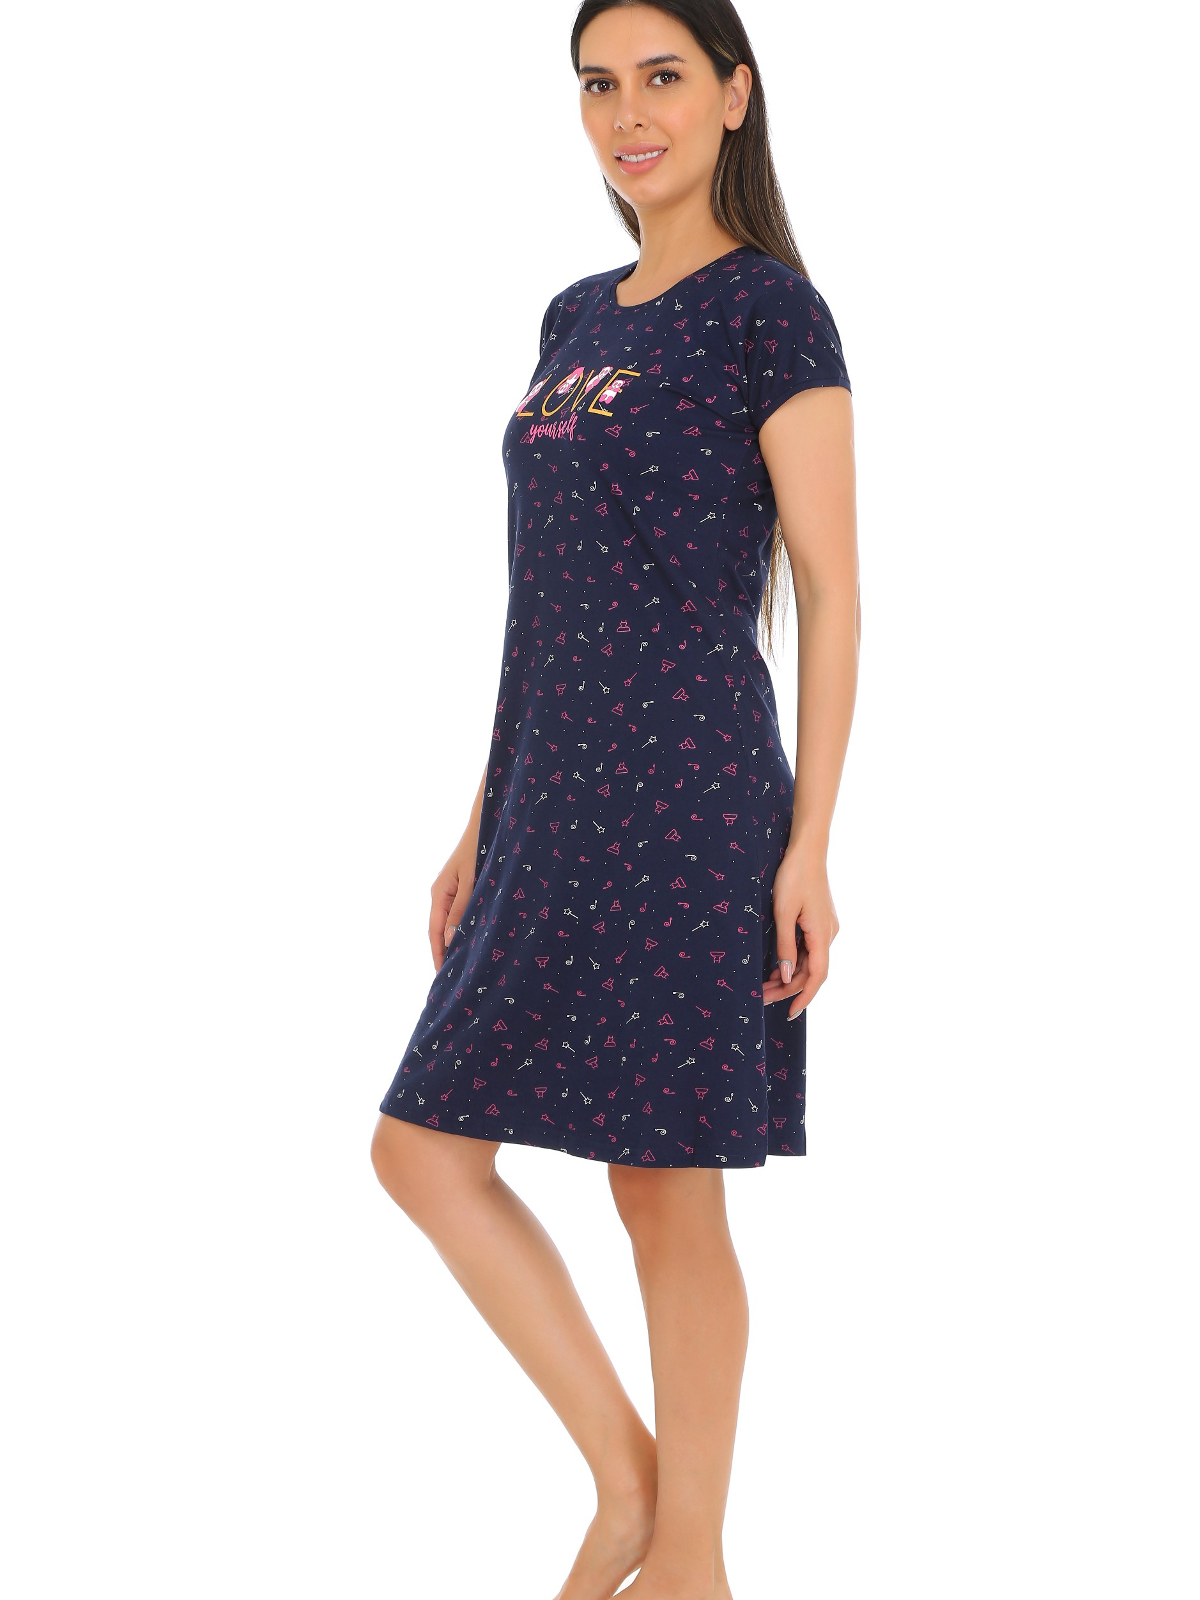 Gudnini Printed Knee Length Mini Dress,Printed Short Night Dress for Women Relax Nightgown Sleepwear Dress Print Lounge Wear